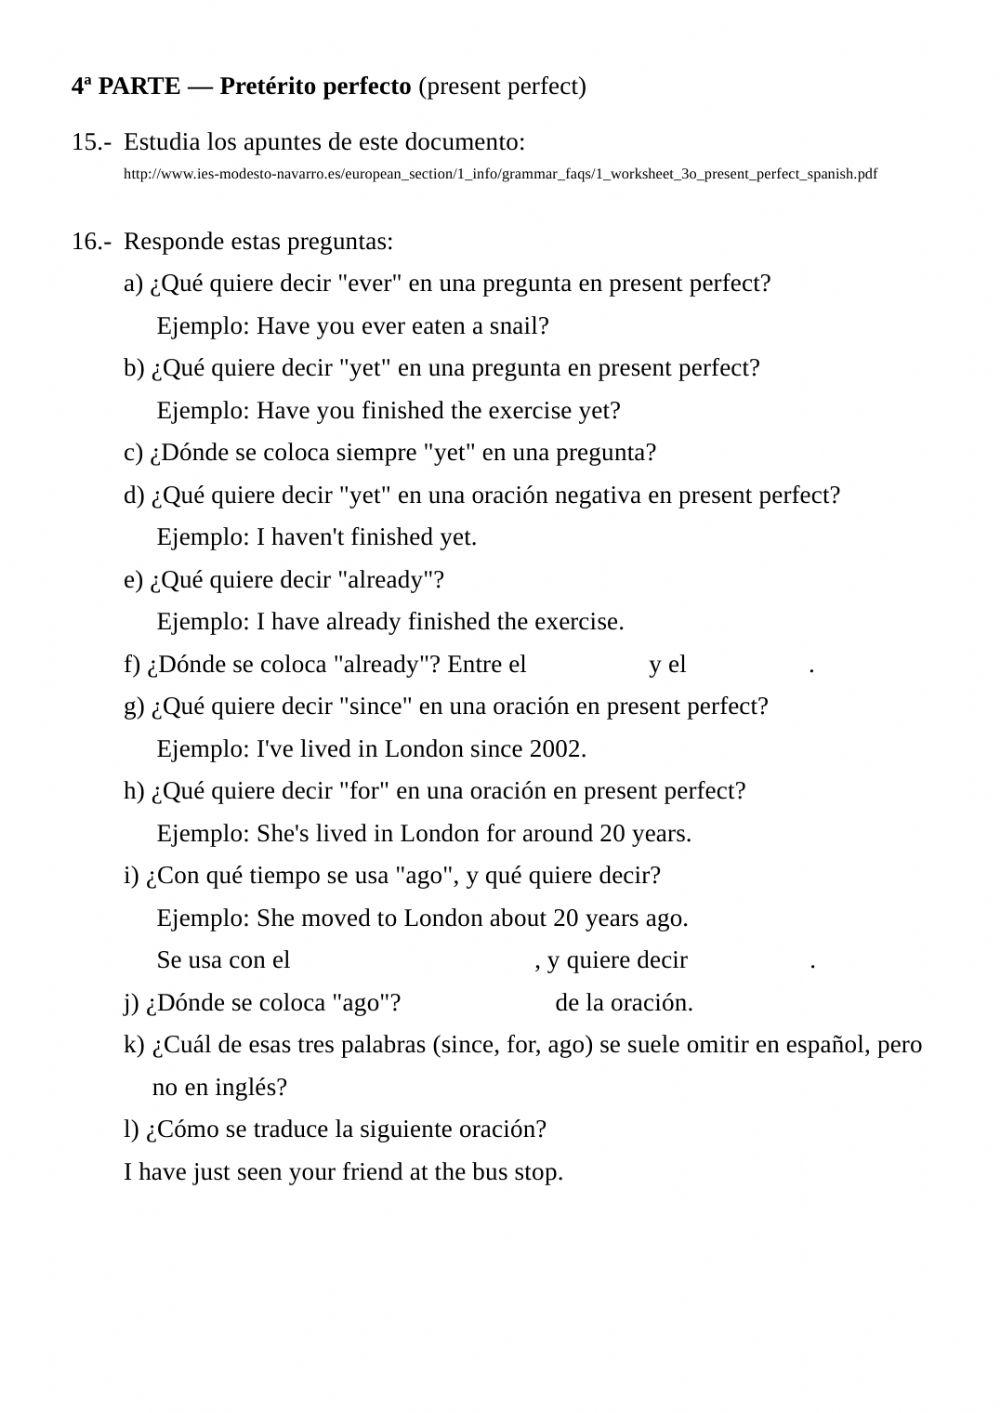 20 Preguntas - 20 Questions- Great Review of Question Words